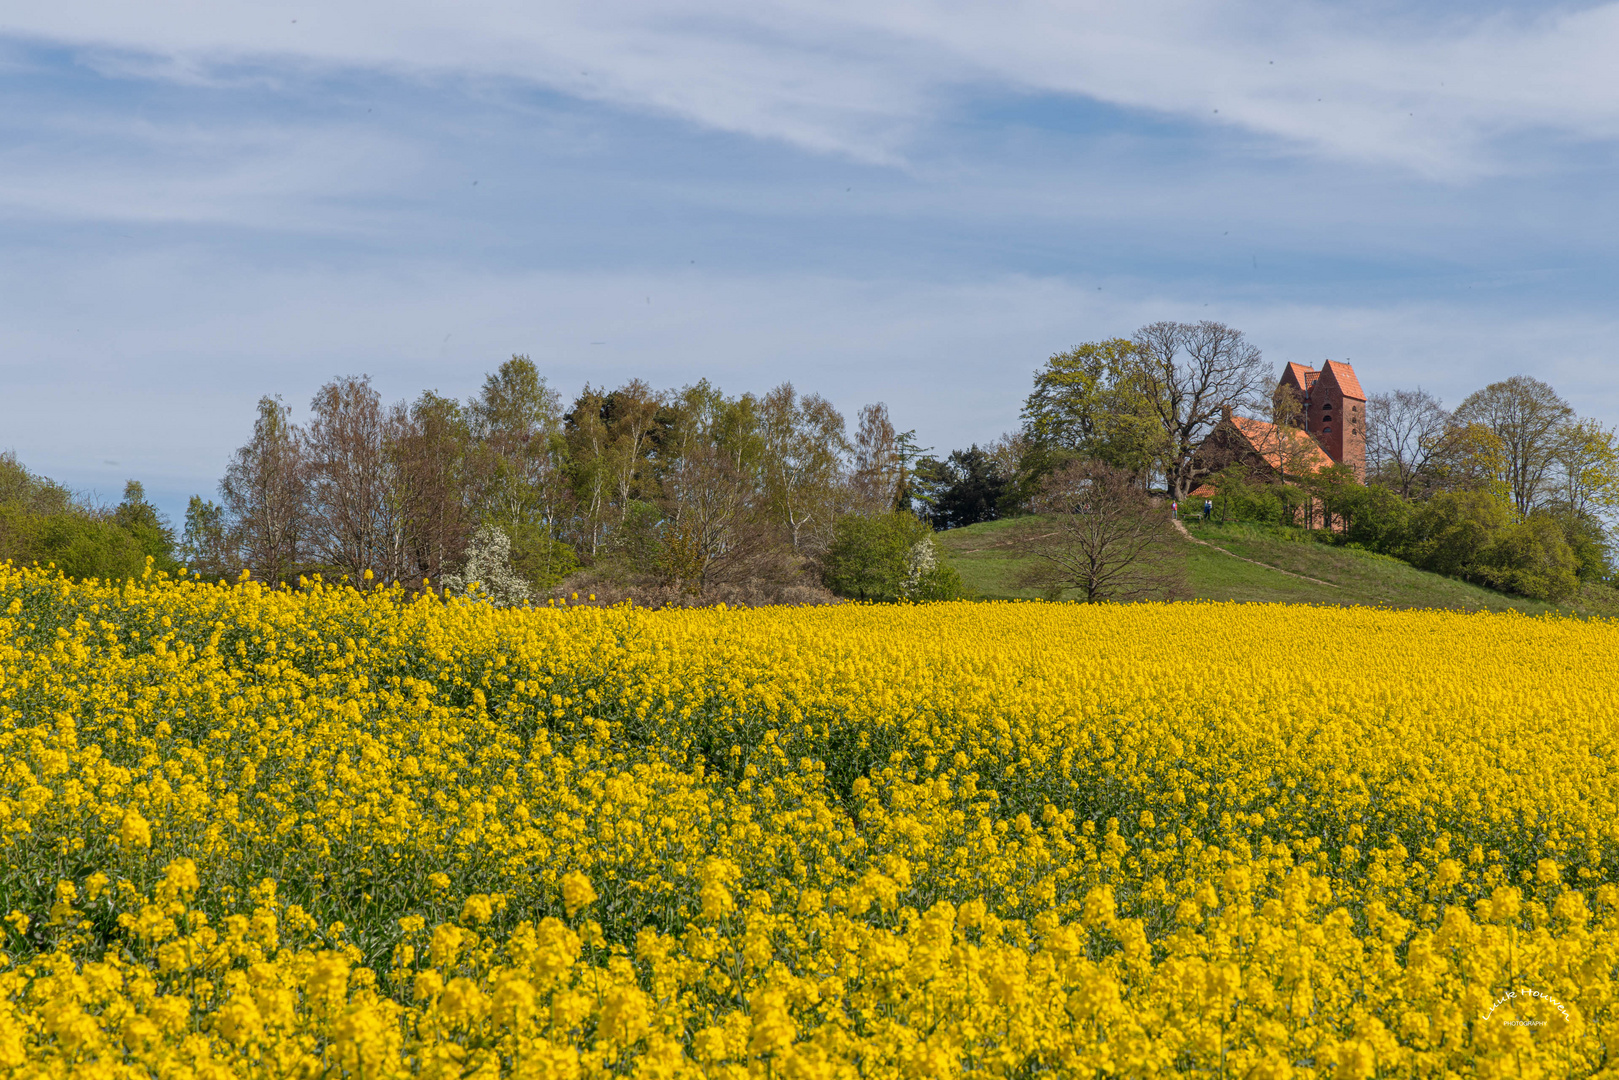 Rapsfelder mit Kirche / Rapeseed fields with church